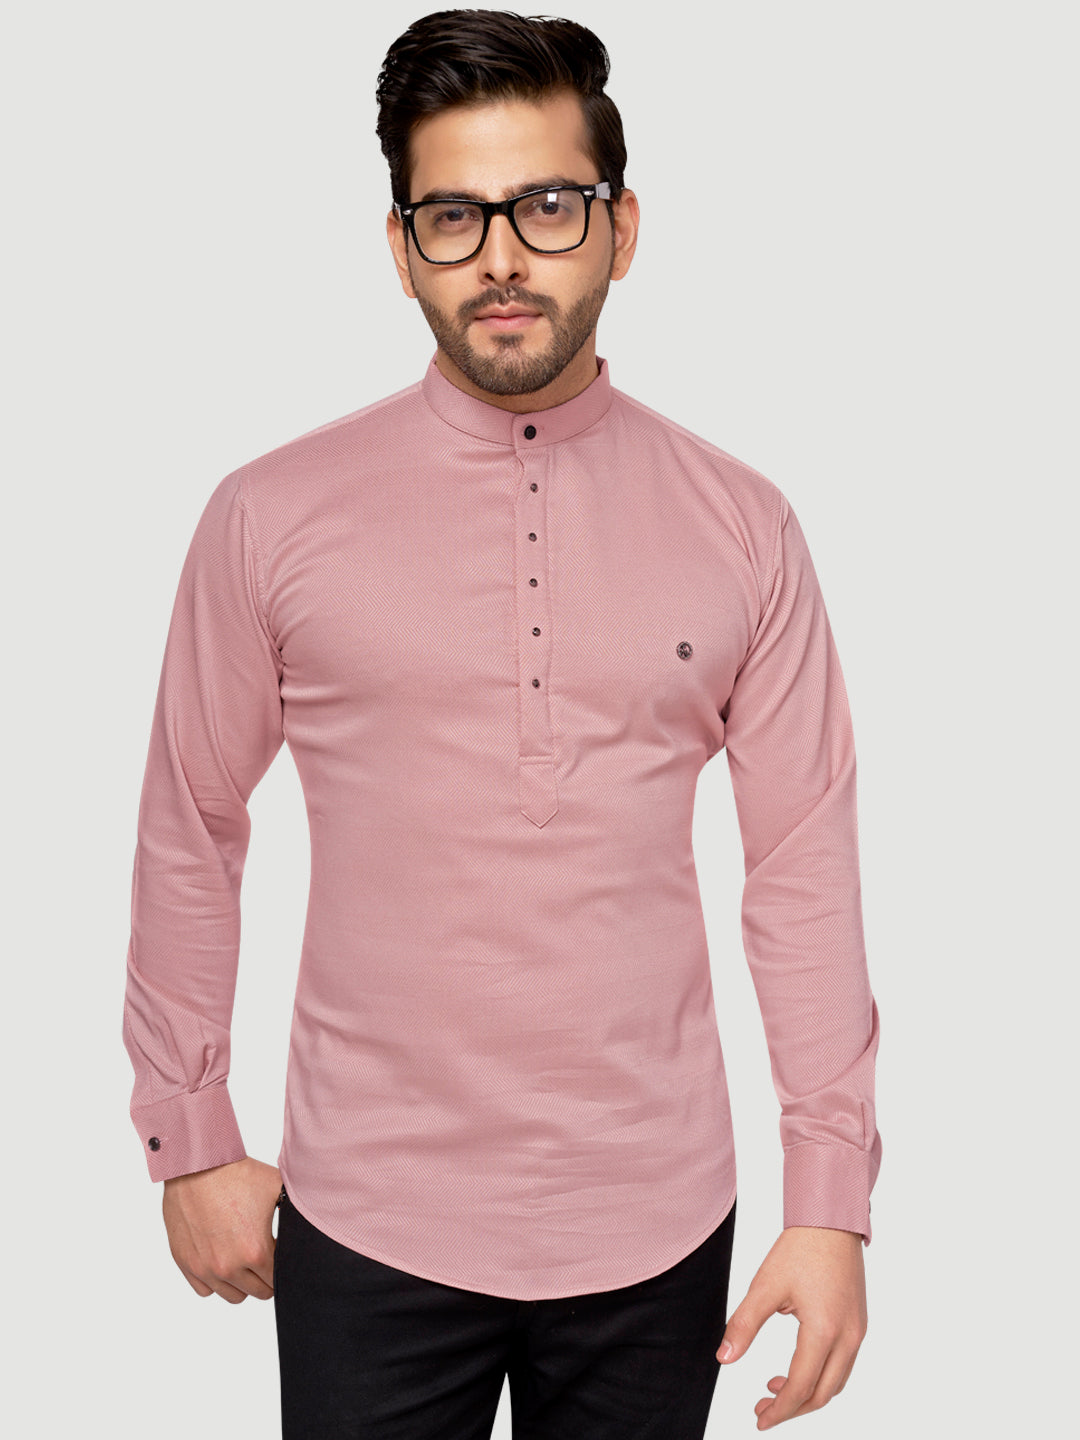 Black and White Shirts Men's Designer Short Kurta with Metal Buttons Salmon Pink